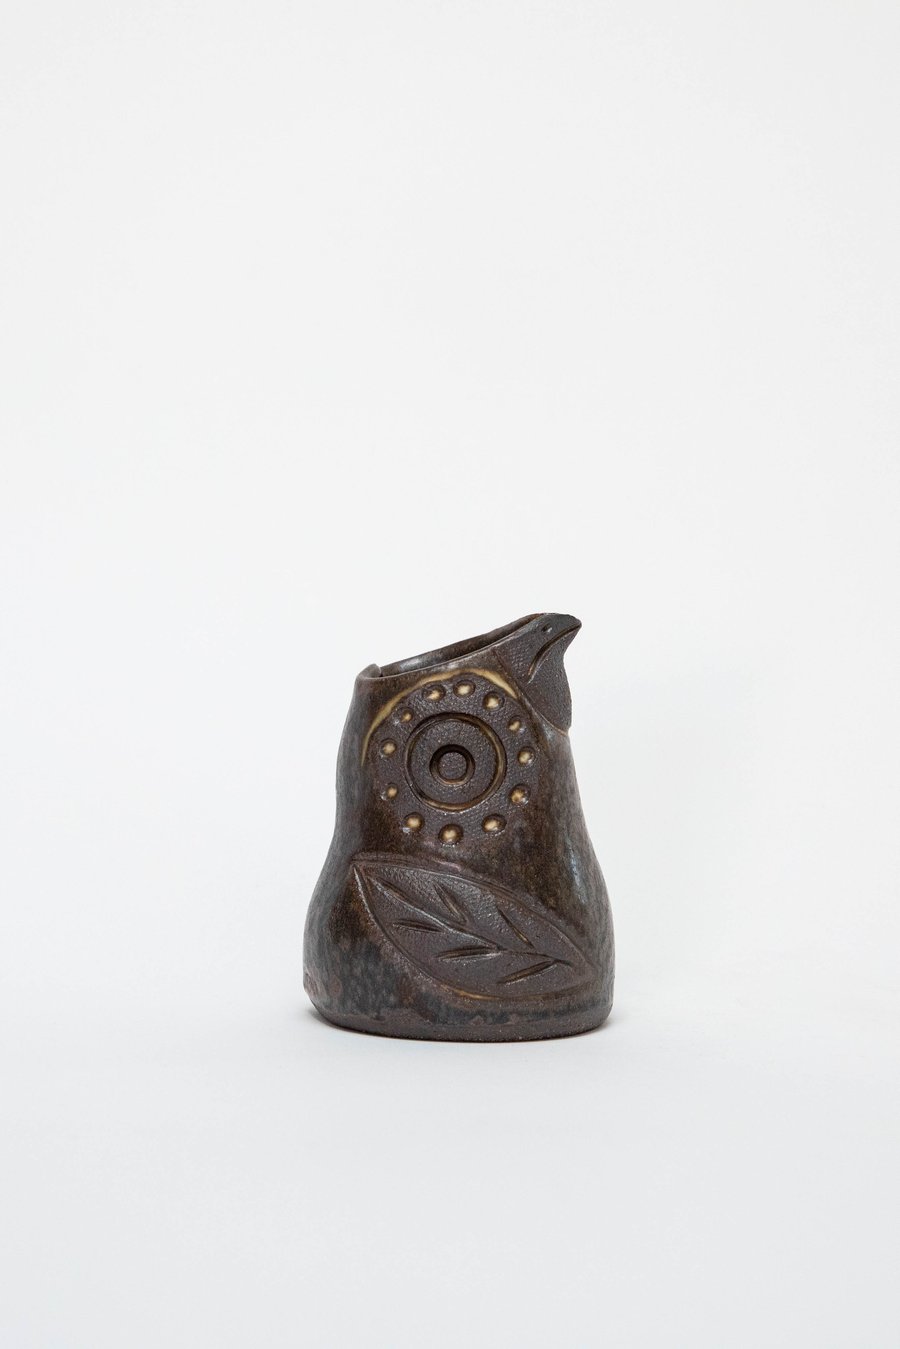 Image of Dark Black Brown Dotted Owl Creamer